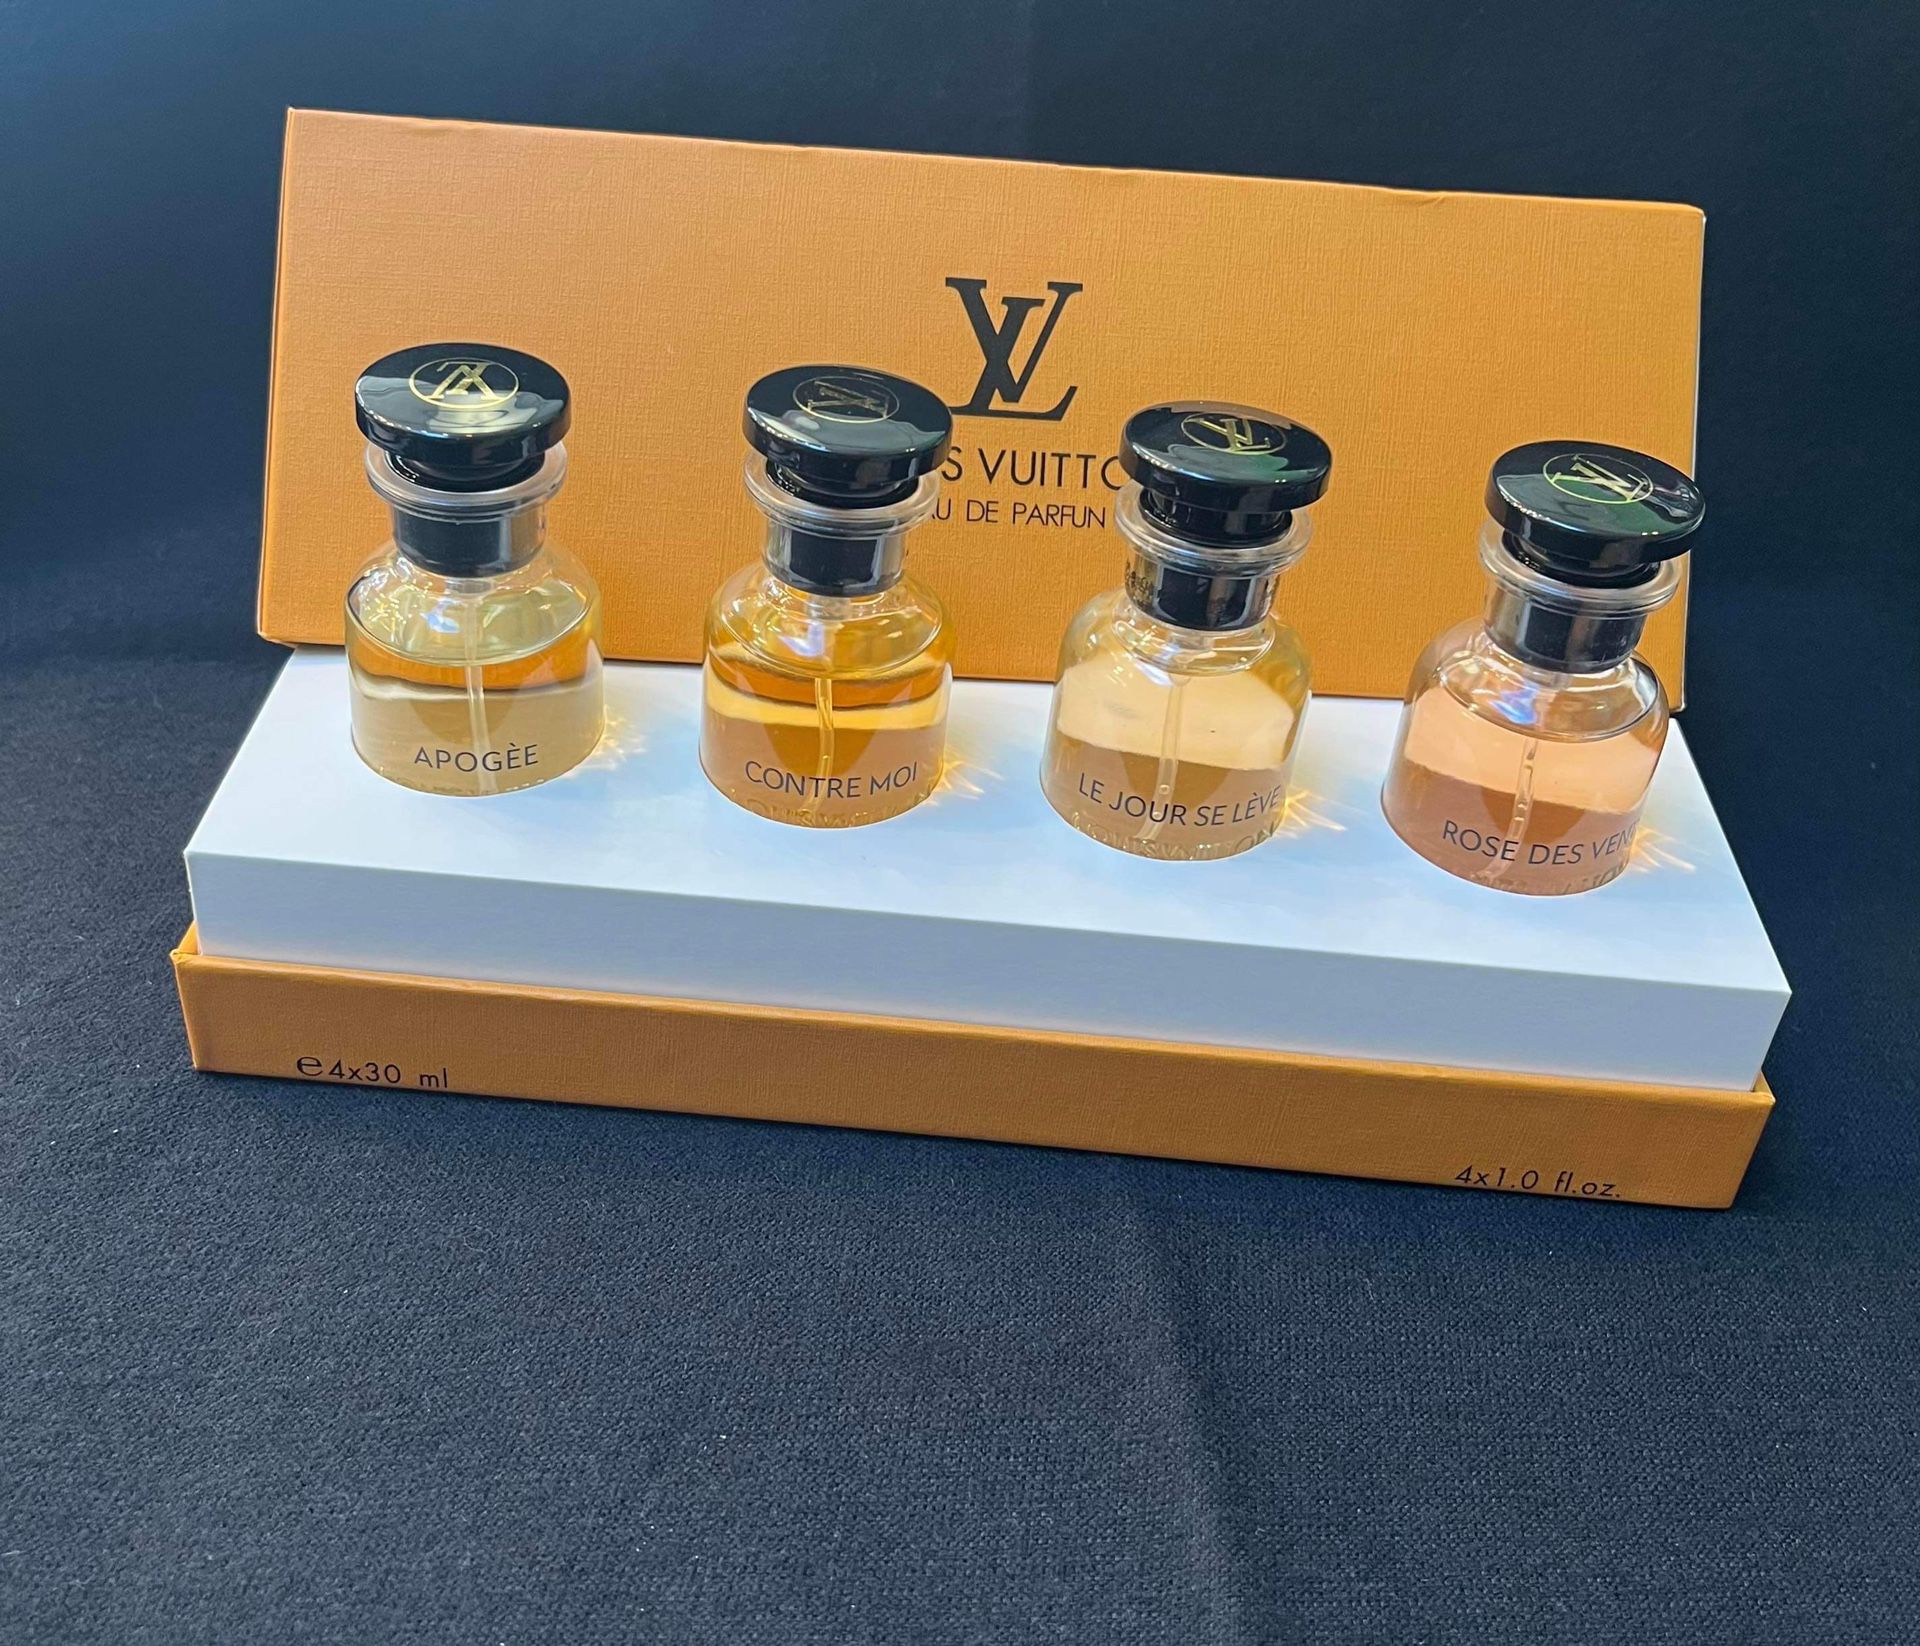 LV spray Perfume 4 X 30 ml with box $80 for Sale in Haltom City